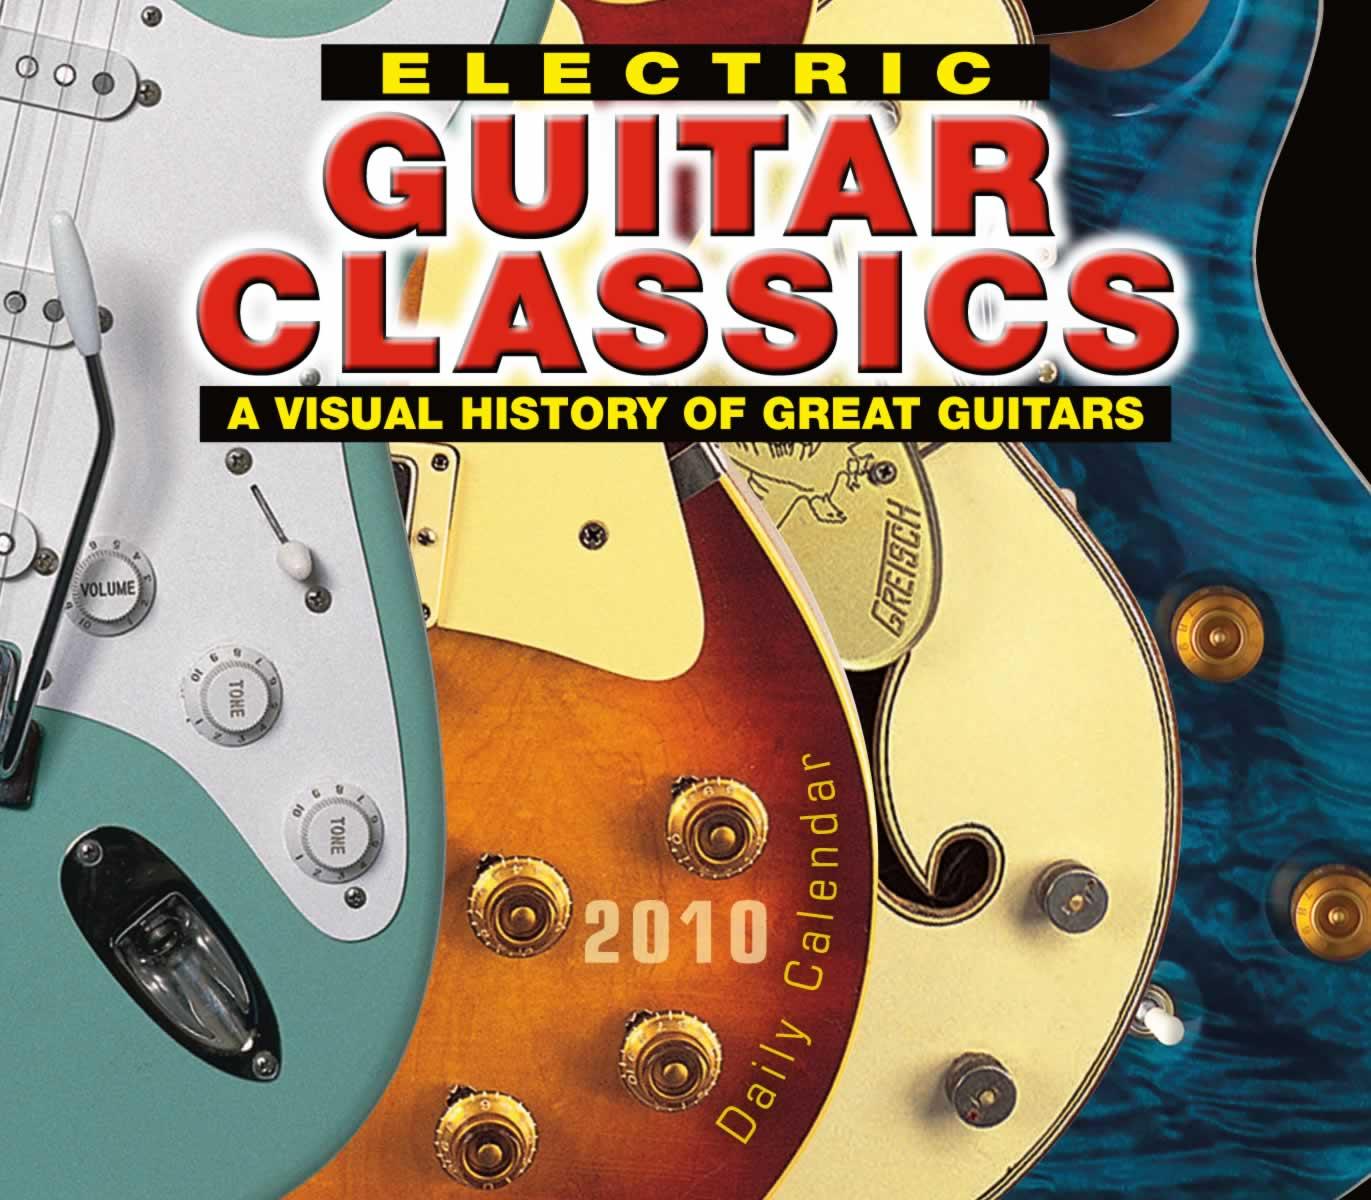 Electric Guitar Classics   Page A Day 2010 Calendar